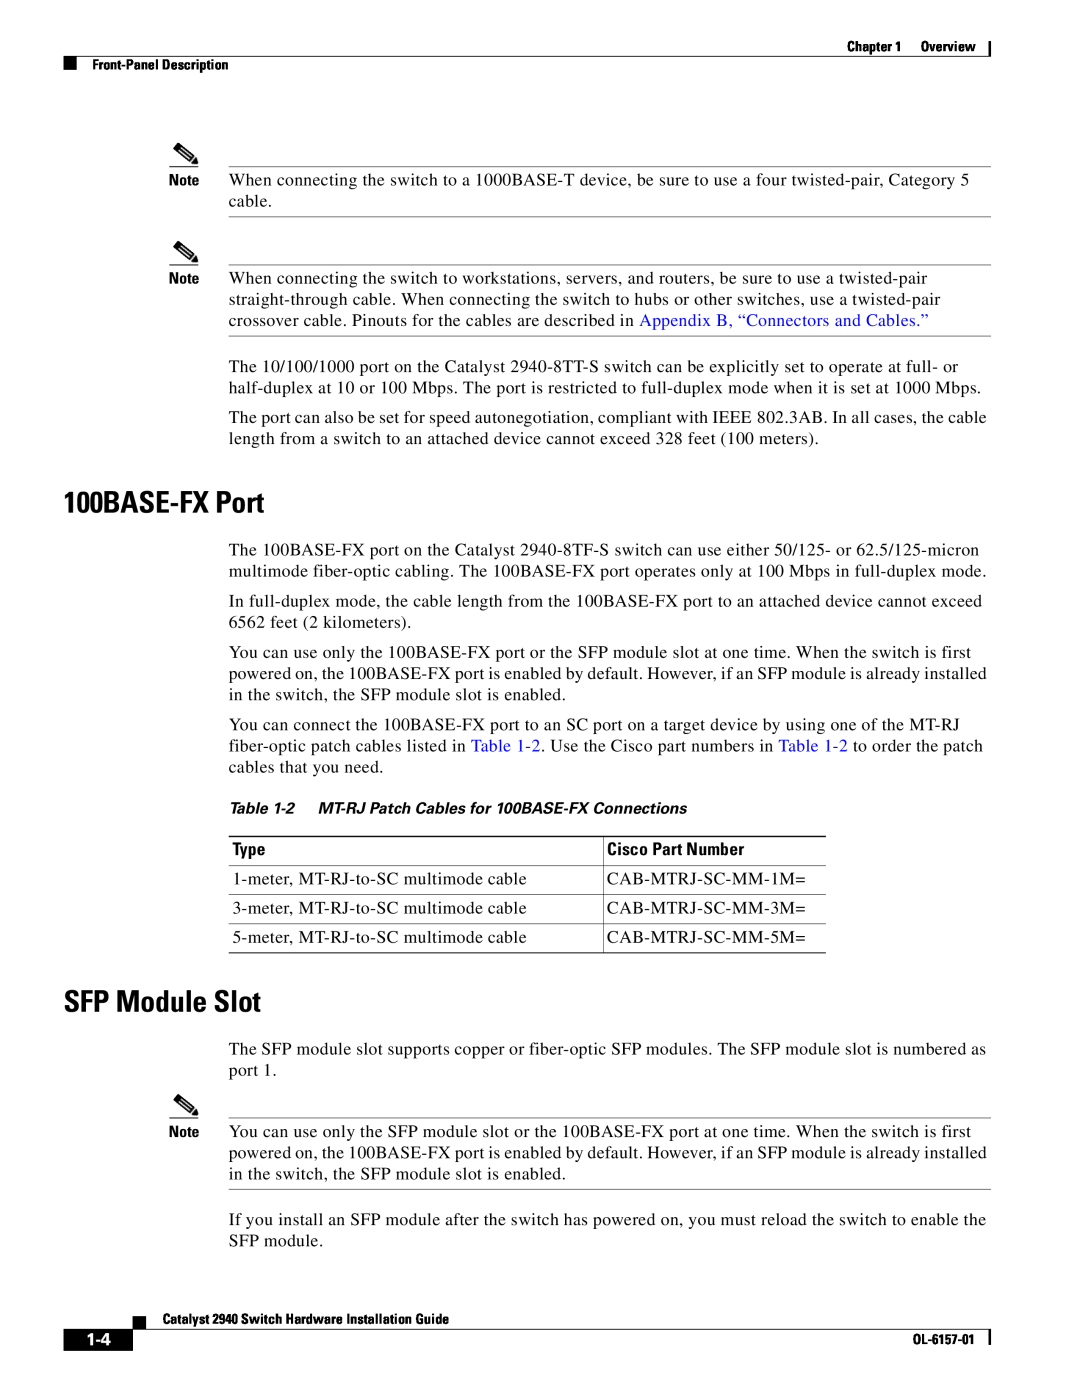 Cisco Systems OL-6157-01 manual 100BASE-FX Port, SFP Module Slot, Type, Cisco Part Number 